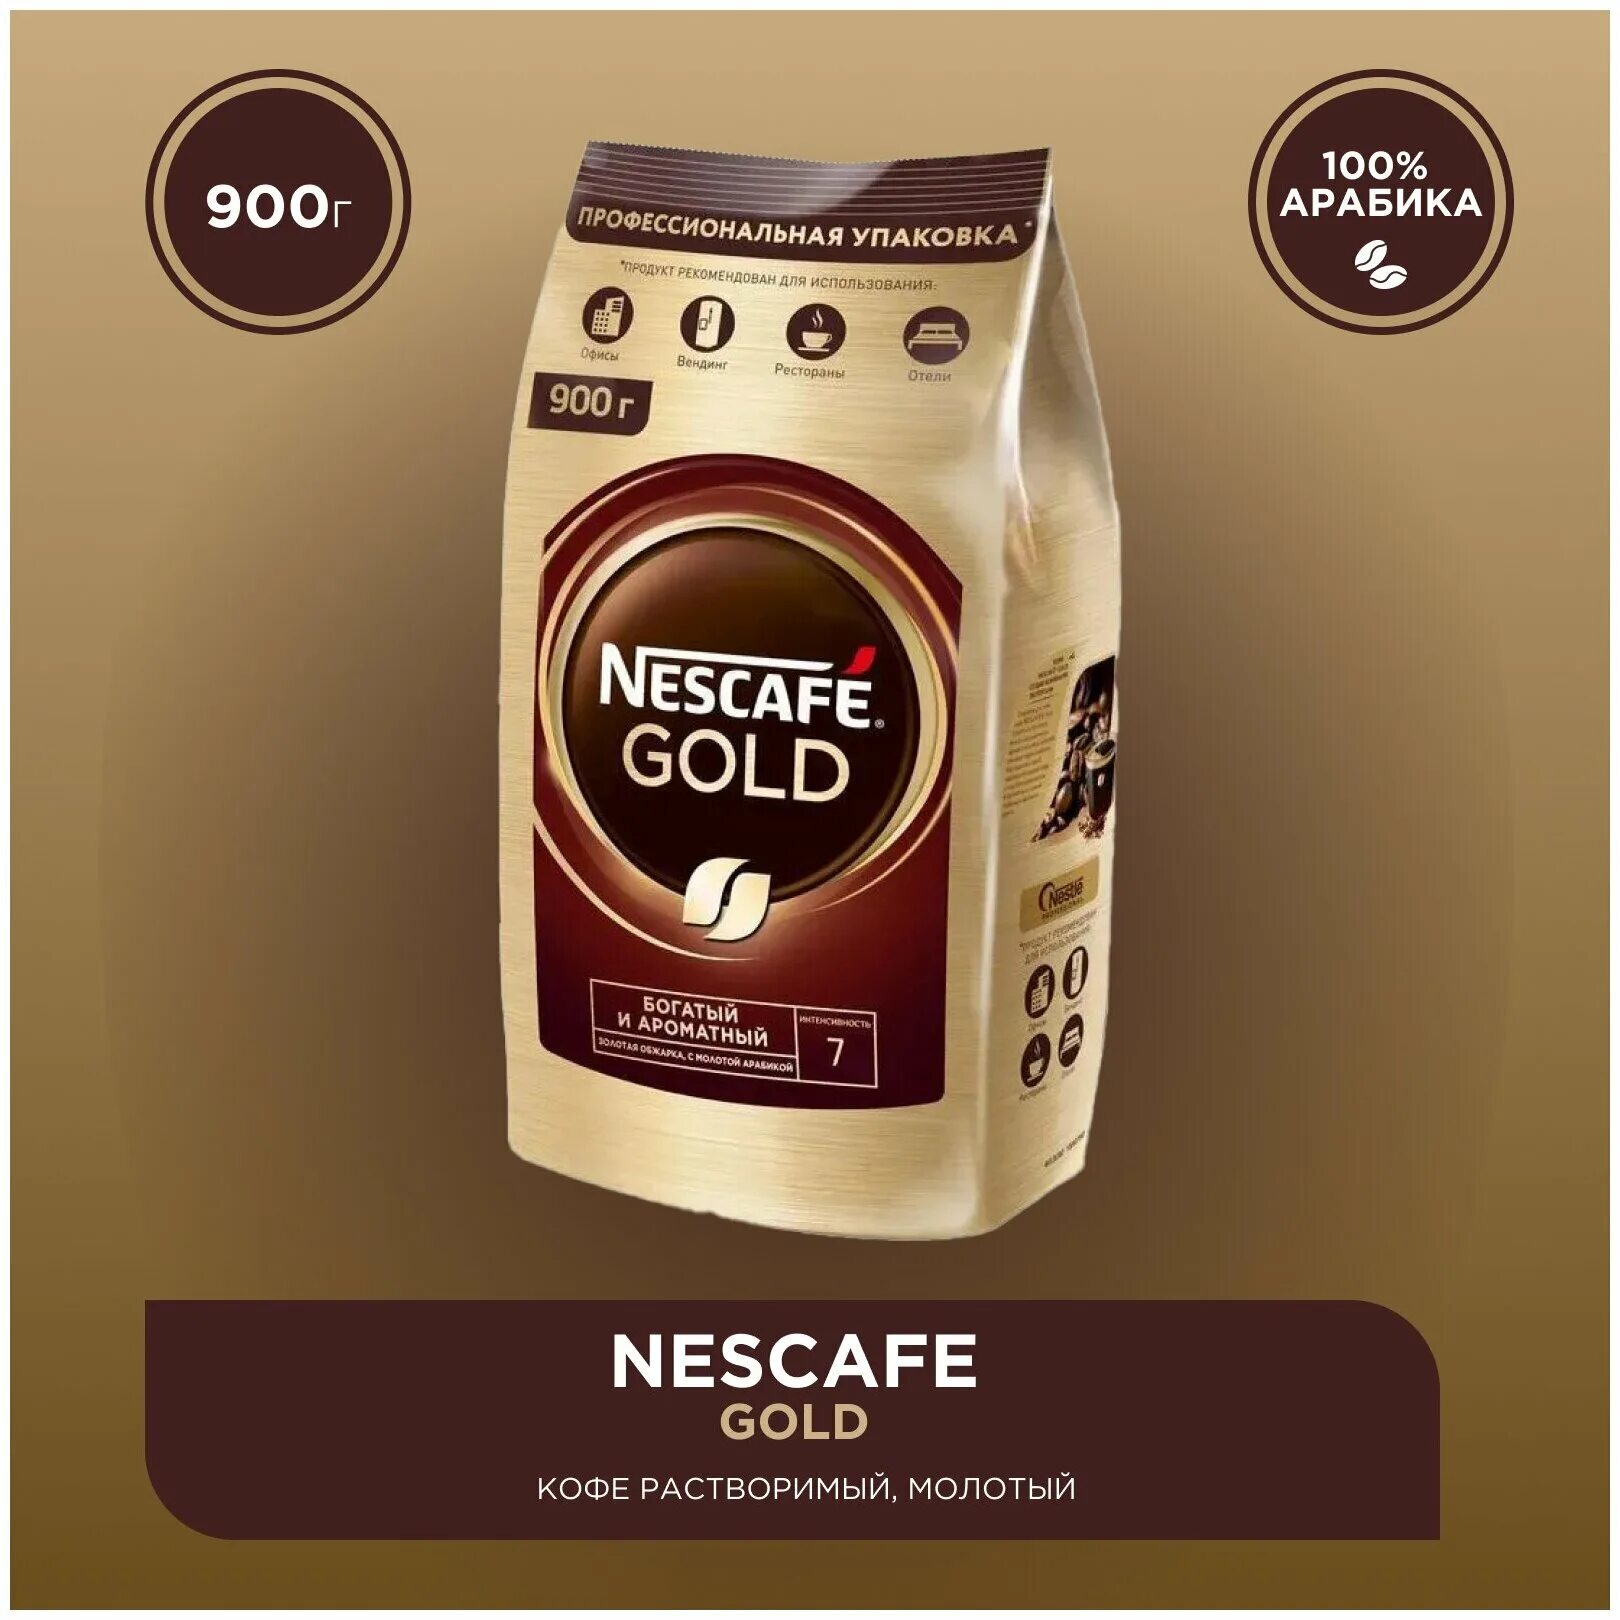 Nescafe gold растворимый 900. Кофе Нескафе Голд 750 гр. Nescafe Gold 900. Кофе растворимый Nescafe Gold 750 г. Нескафе Голд 900 гр.